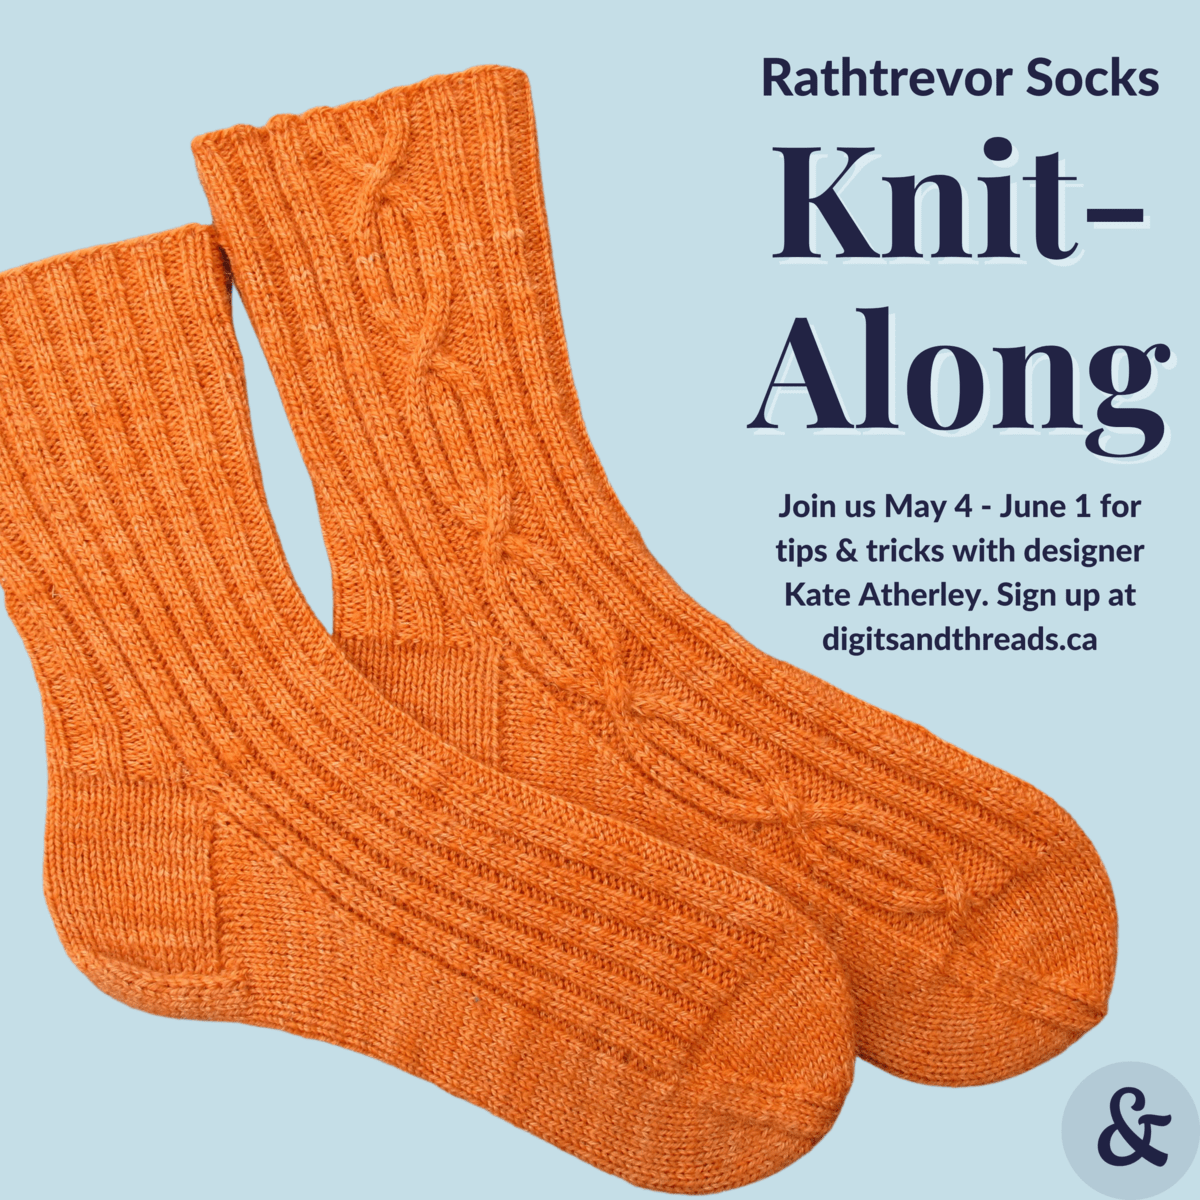 Join Us for the Rathtrevor Socks Knit-Along!